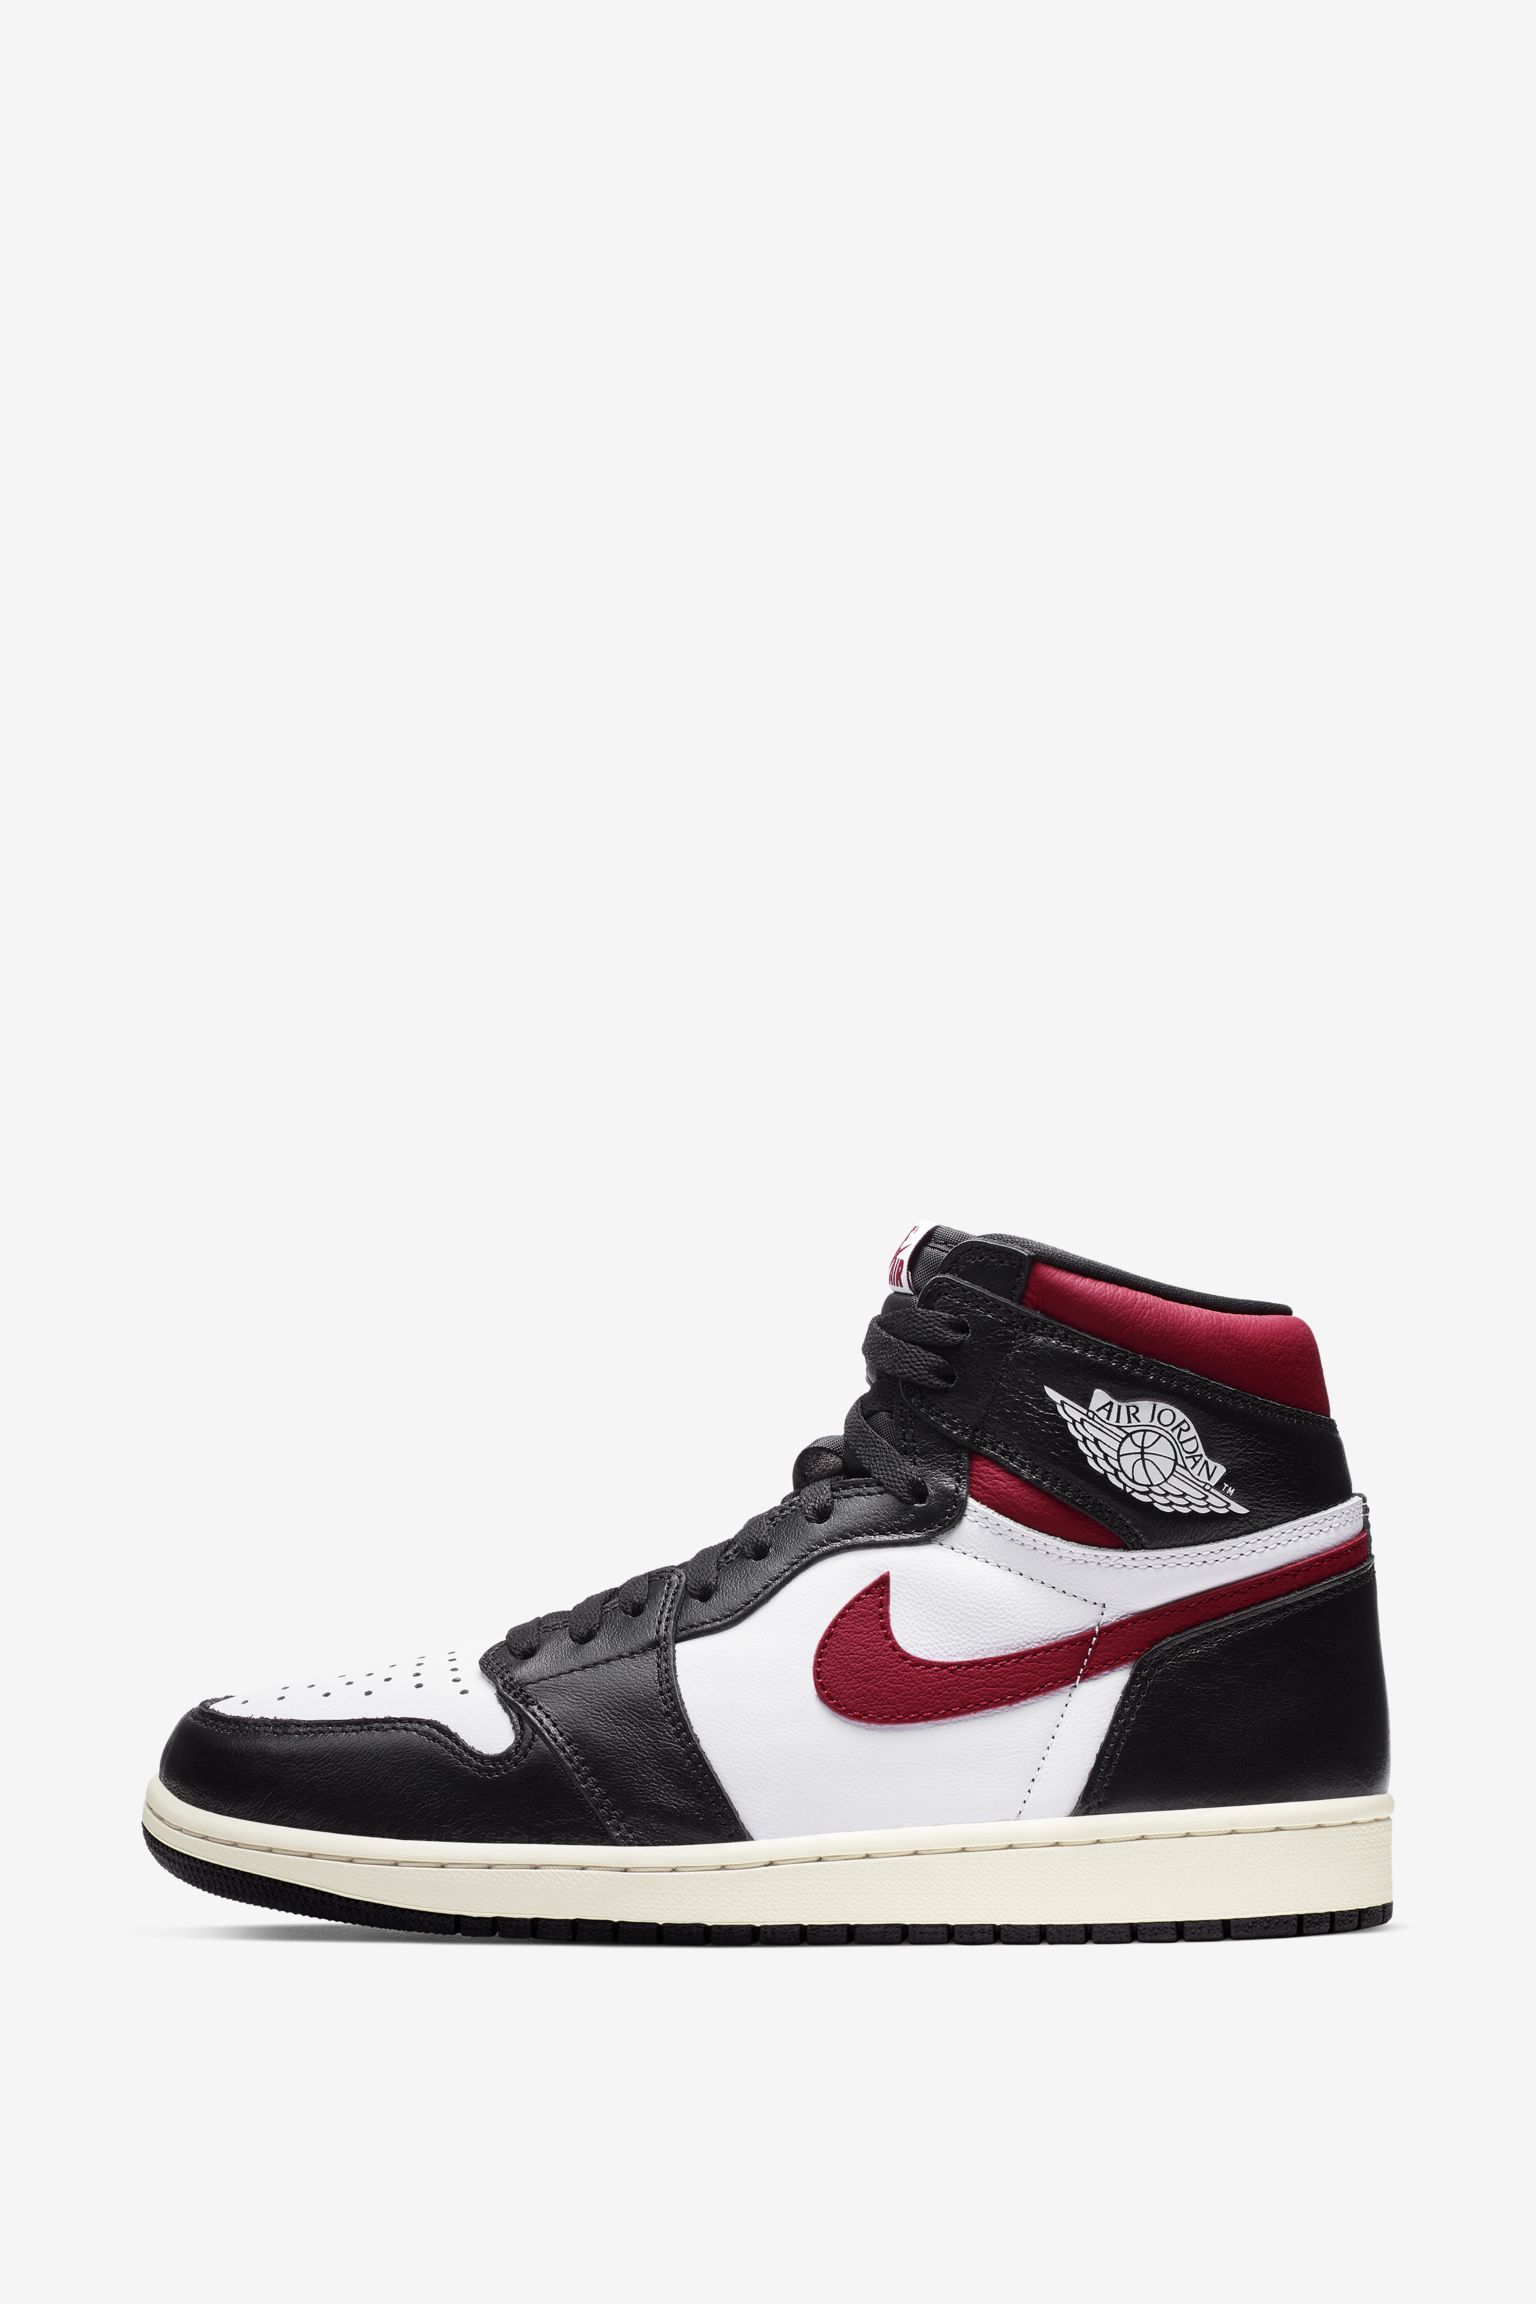 Air Jordan I 'Black/White/Sail/Gym Red' Release Date. Nike SNKRS